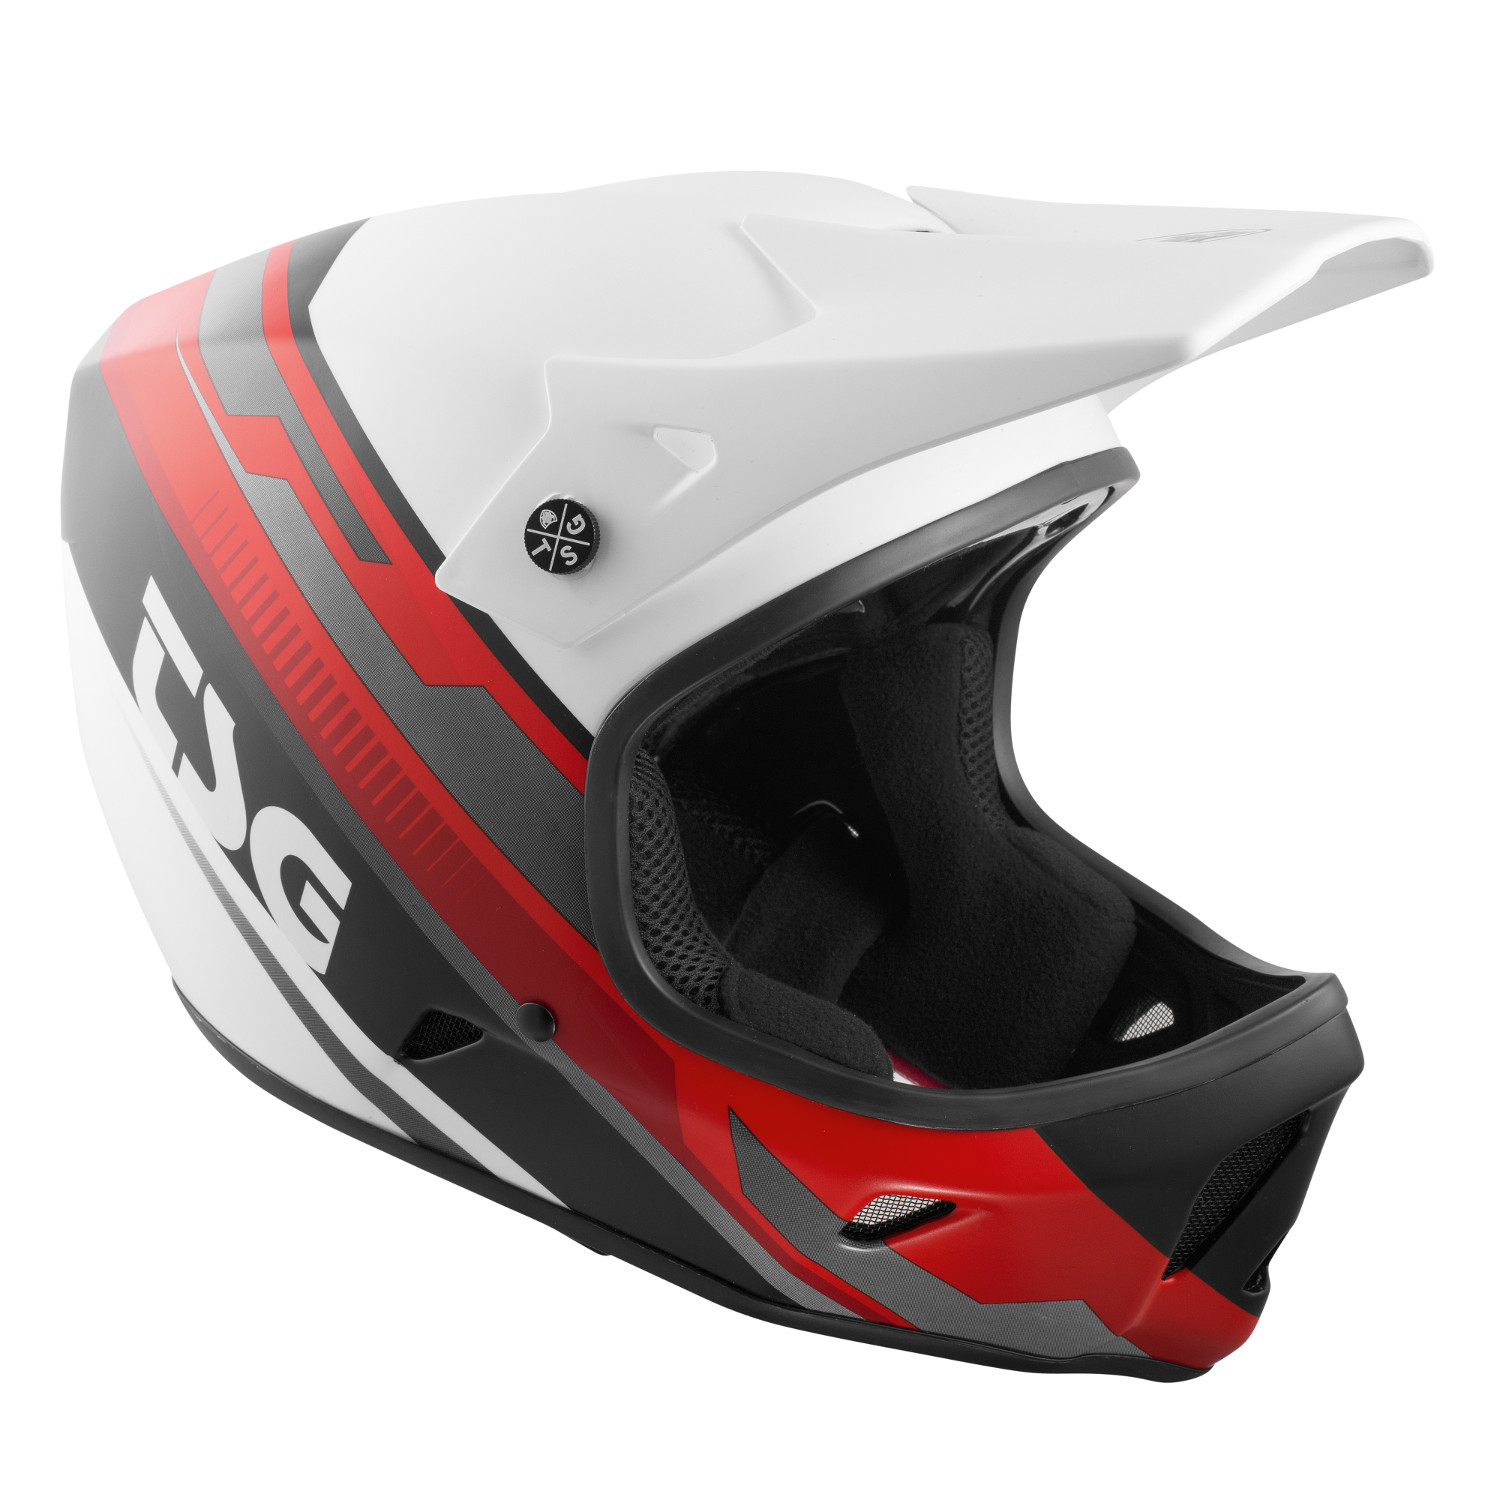 TSG Downhill MTB Helmet Advance Graphic Design - The Connetic